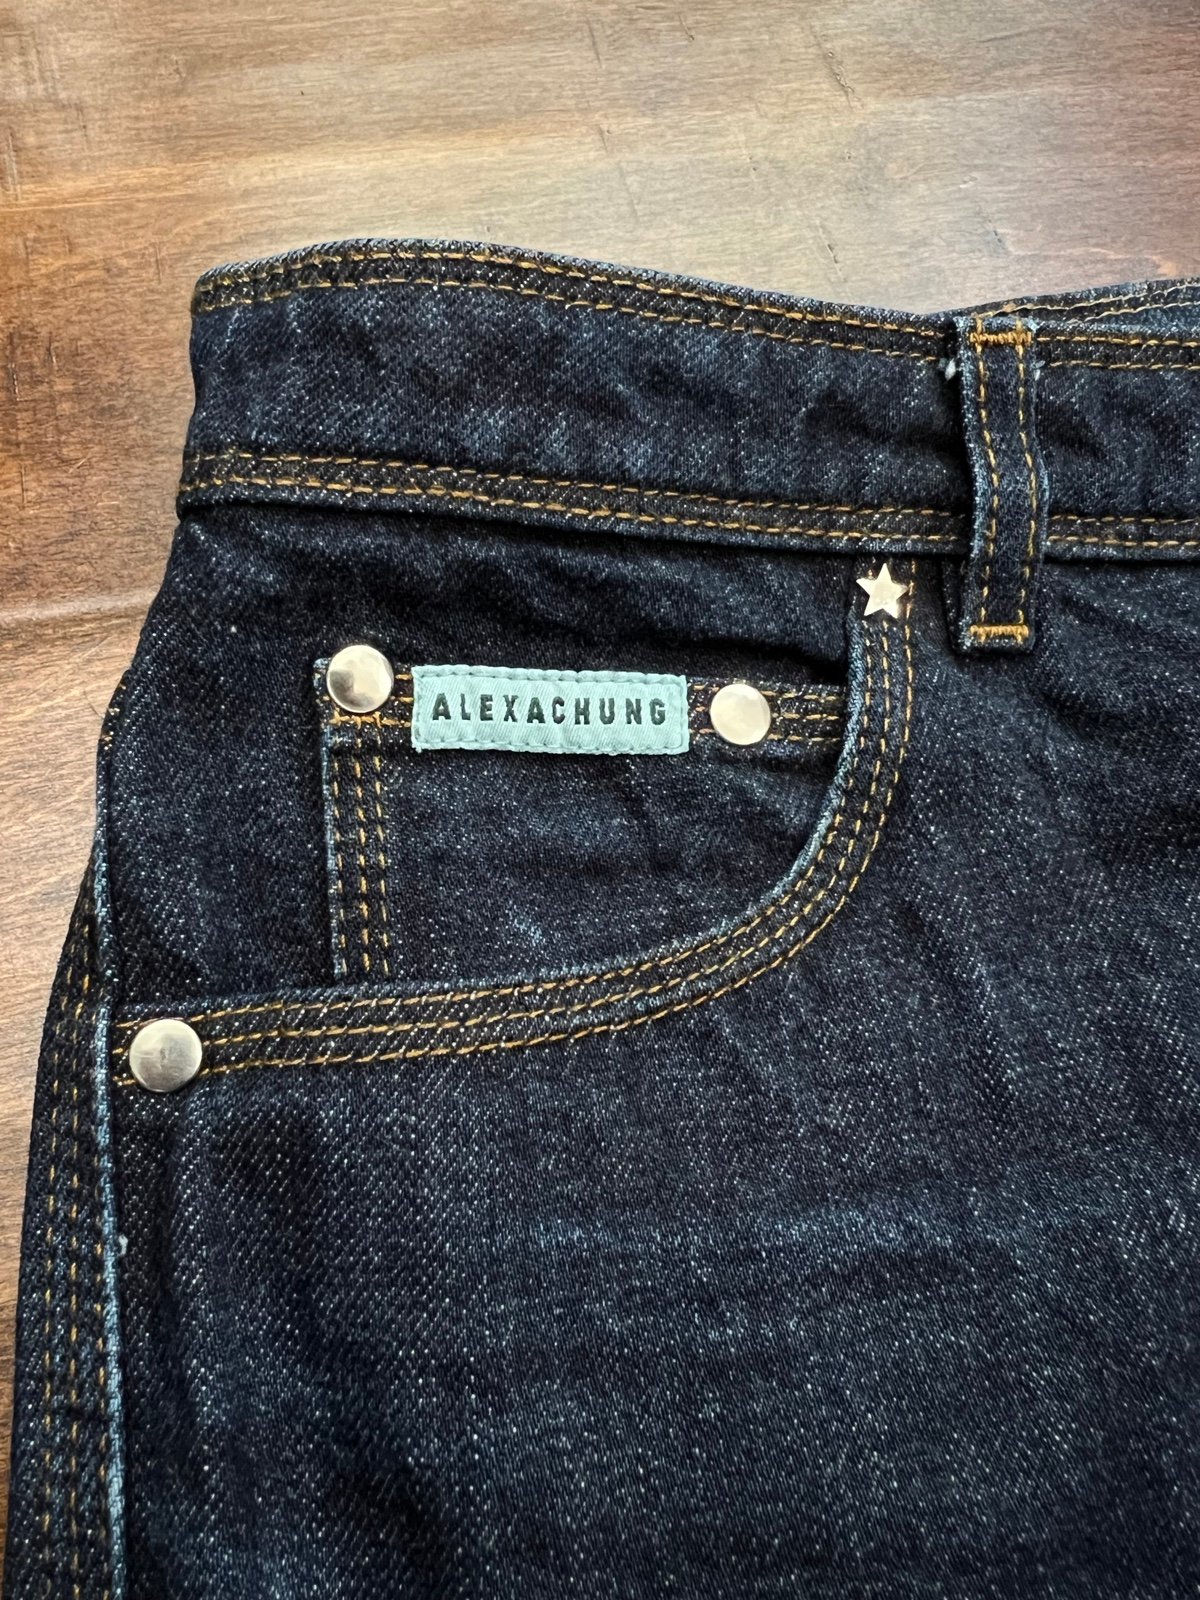 Personality ALEXACHUNG Jeans Undone Frayed Luxury Italy Designer Denim Streetwear mkge7J5pJ just buy it